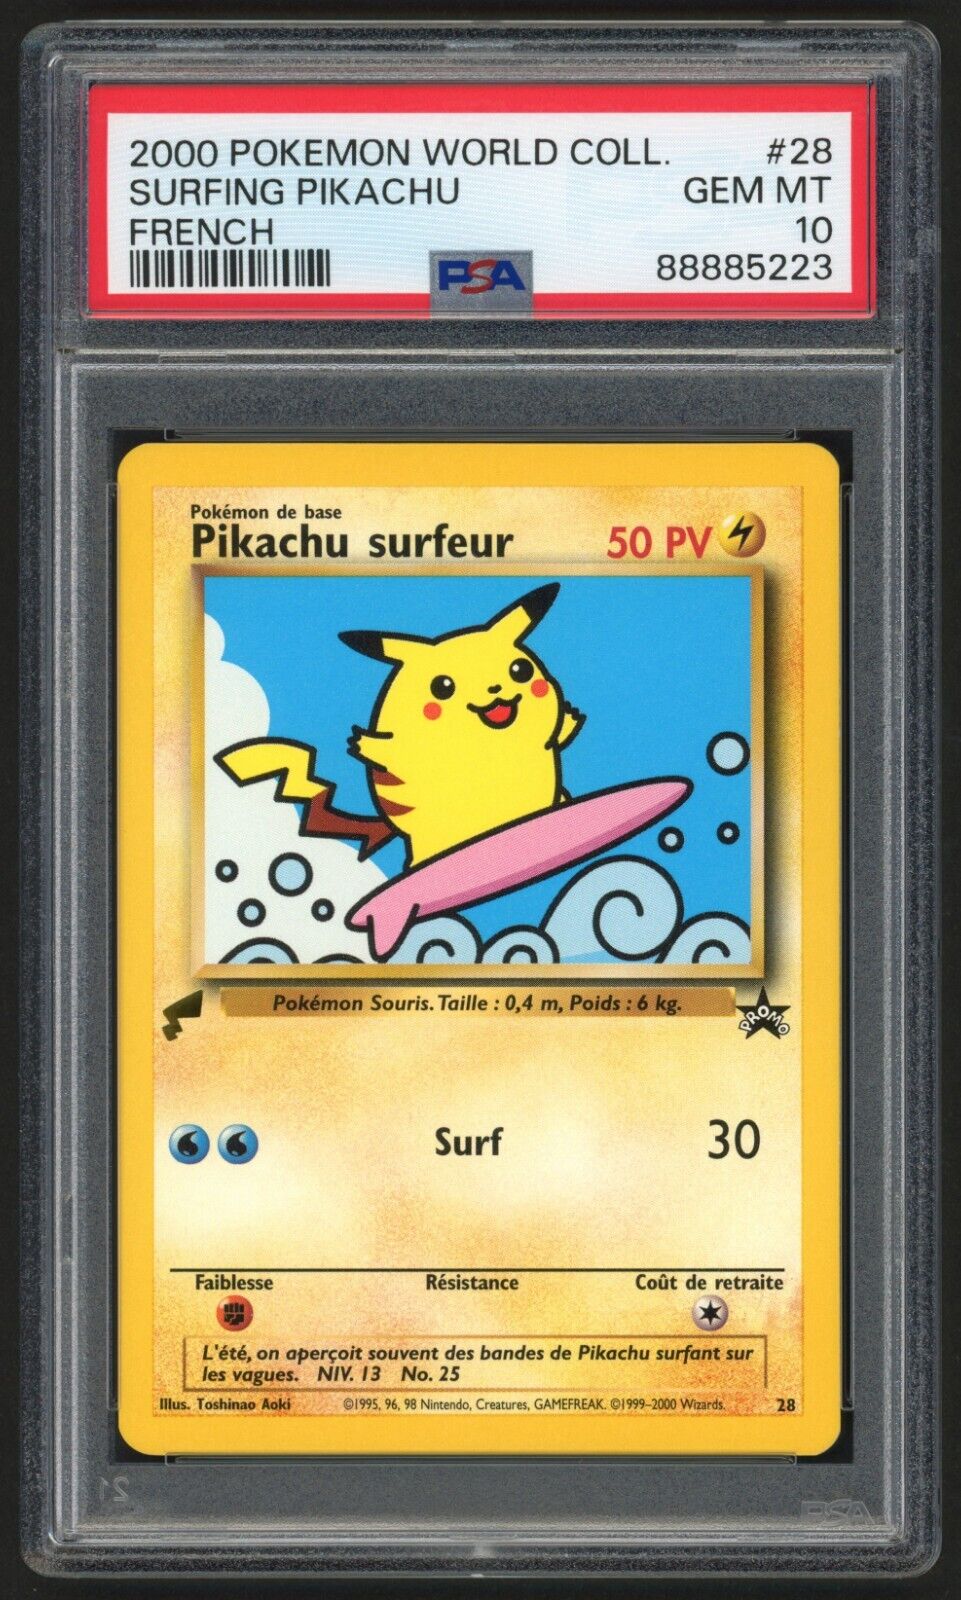 Surfing Pikachu #28 Pokemon World Collection WOTC Black Star Promo FRENCH PSA 10